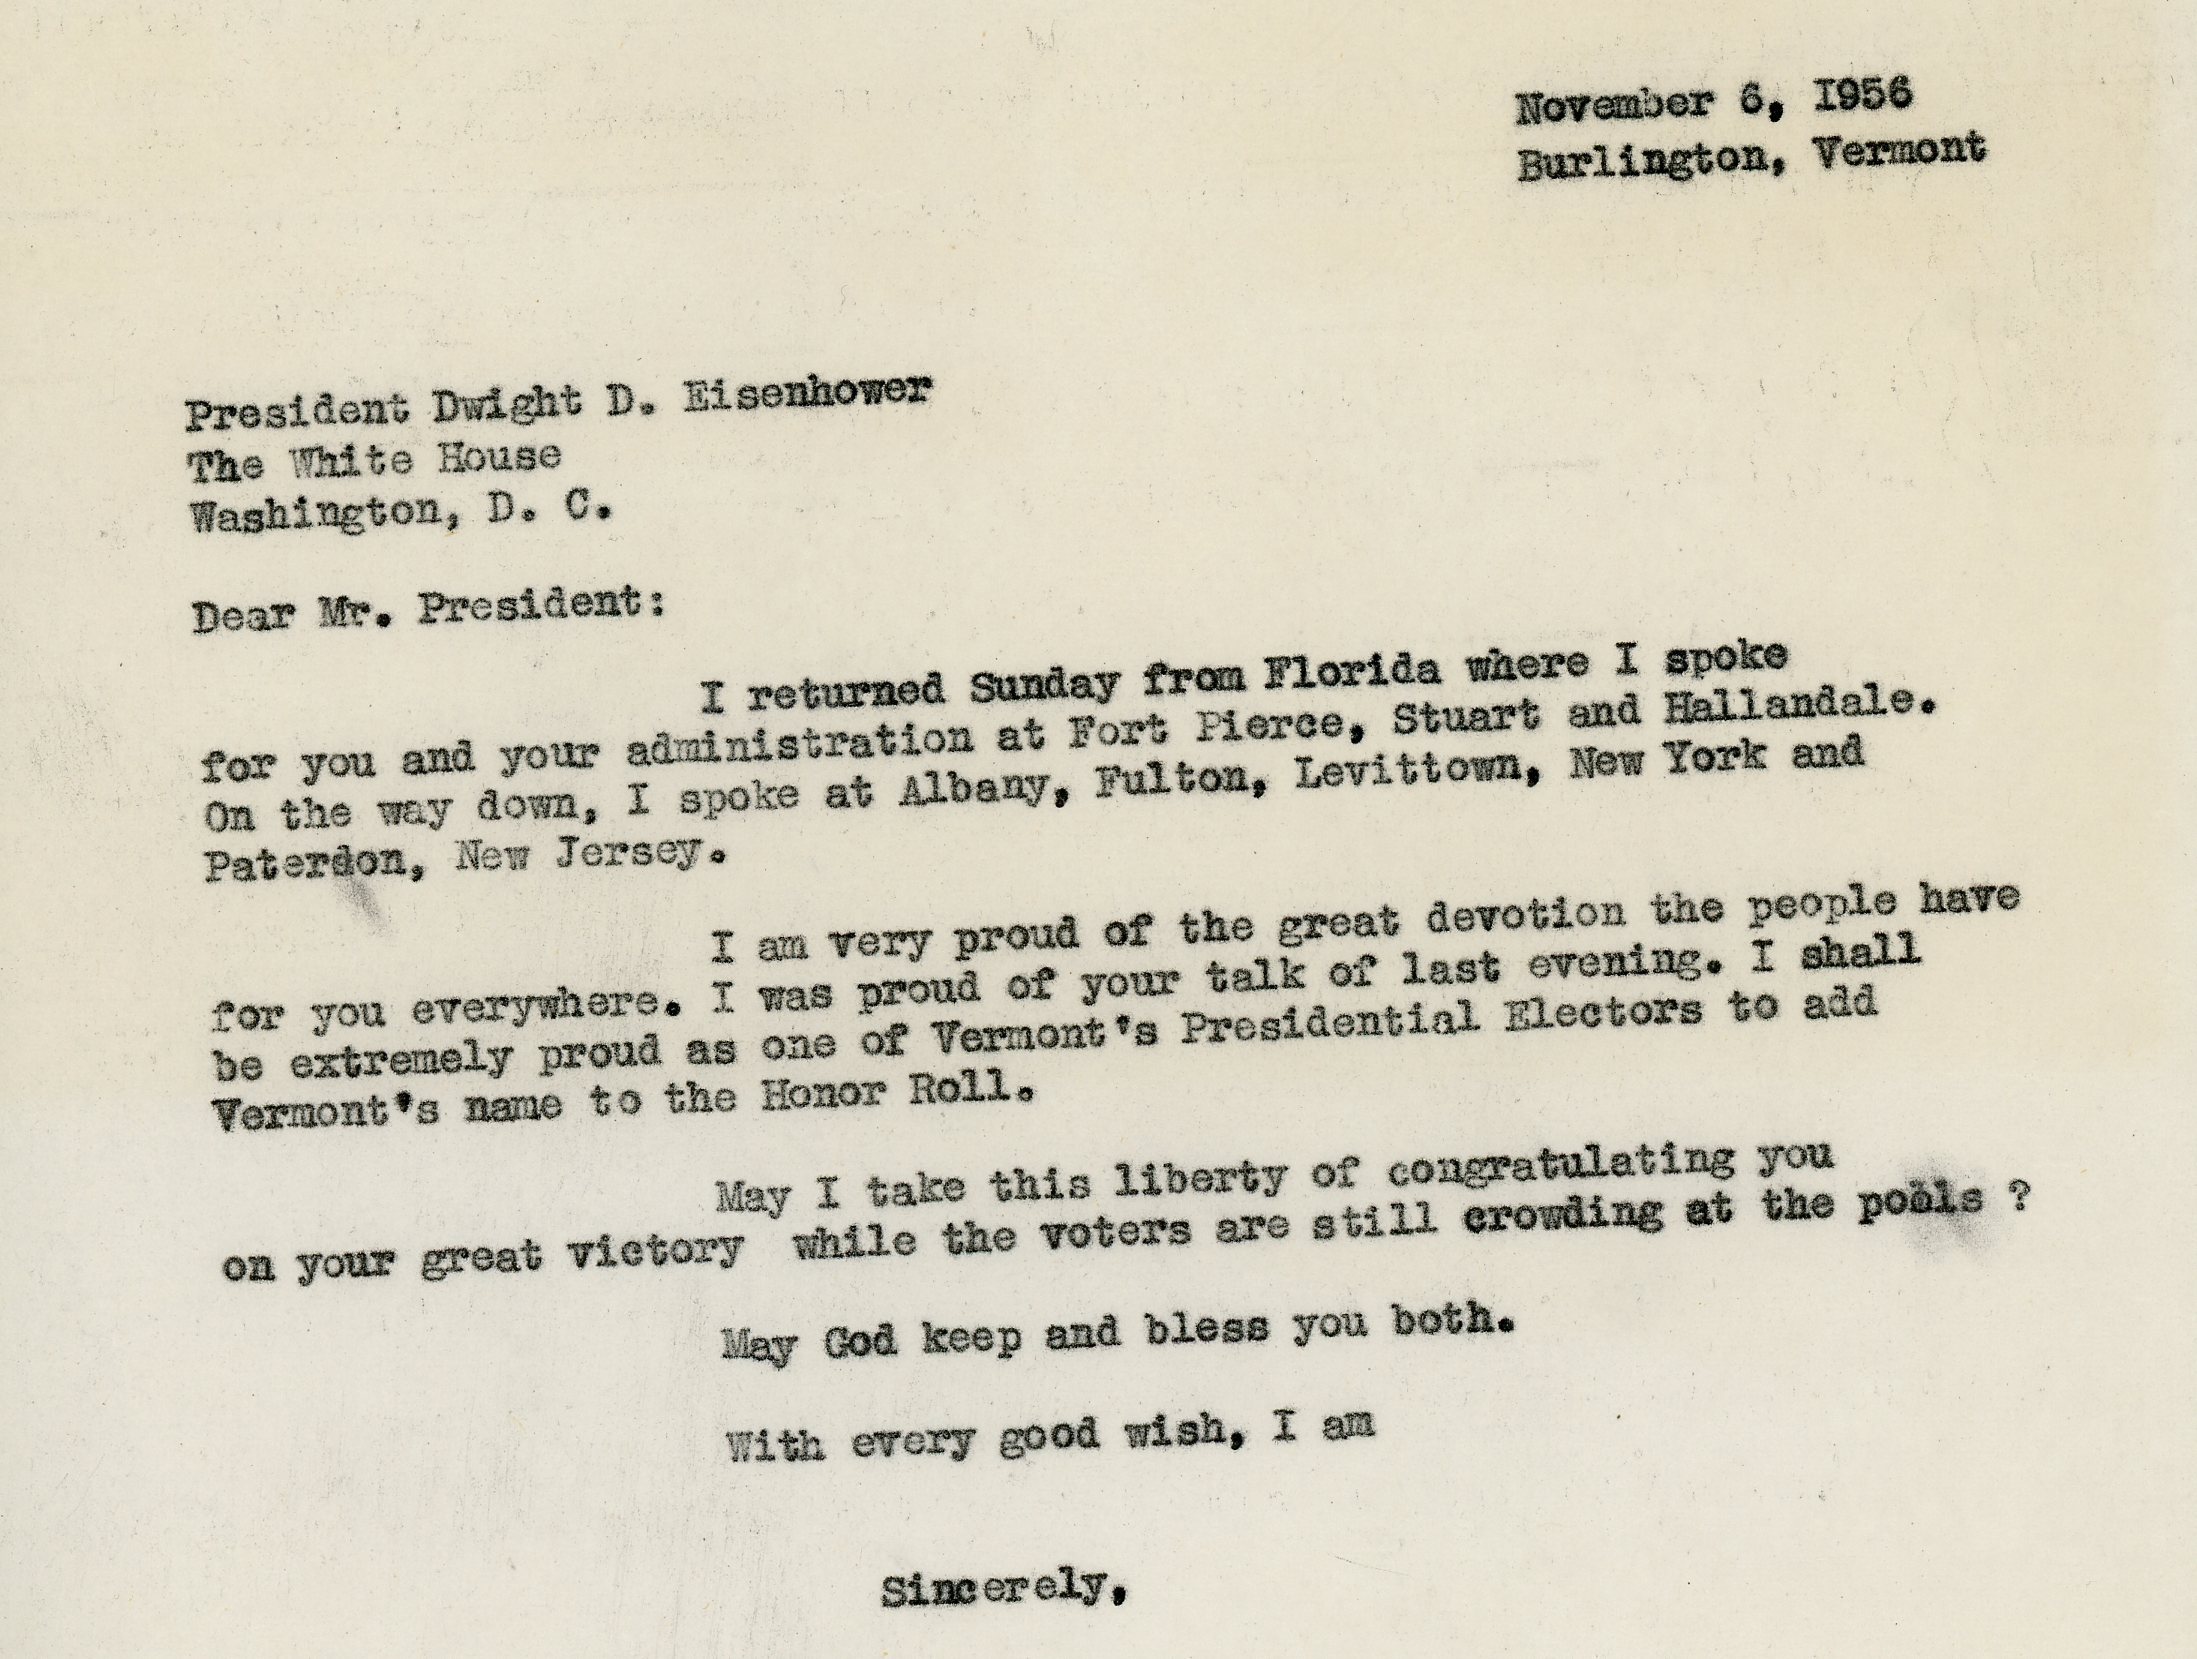 Consuelo Northrop Bailey to President Dwight D. Eisenhower, 1956 November 6